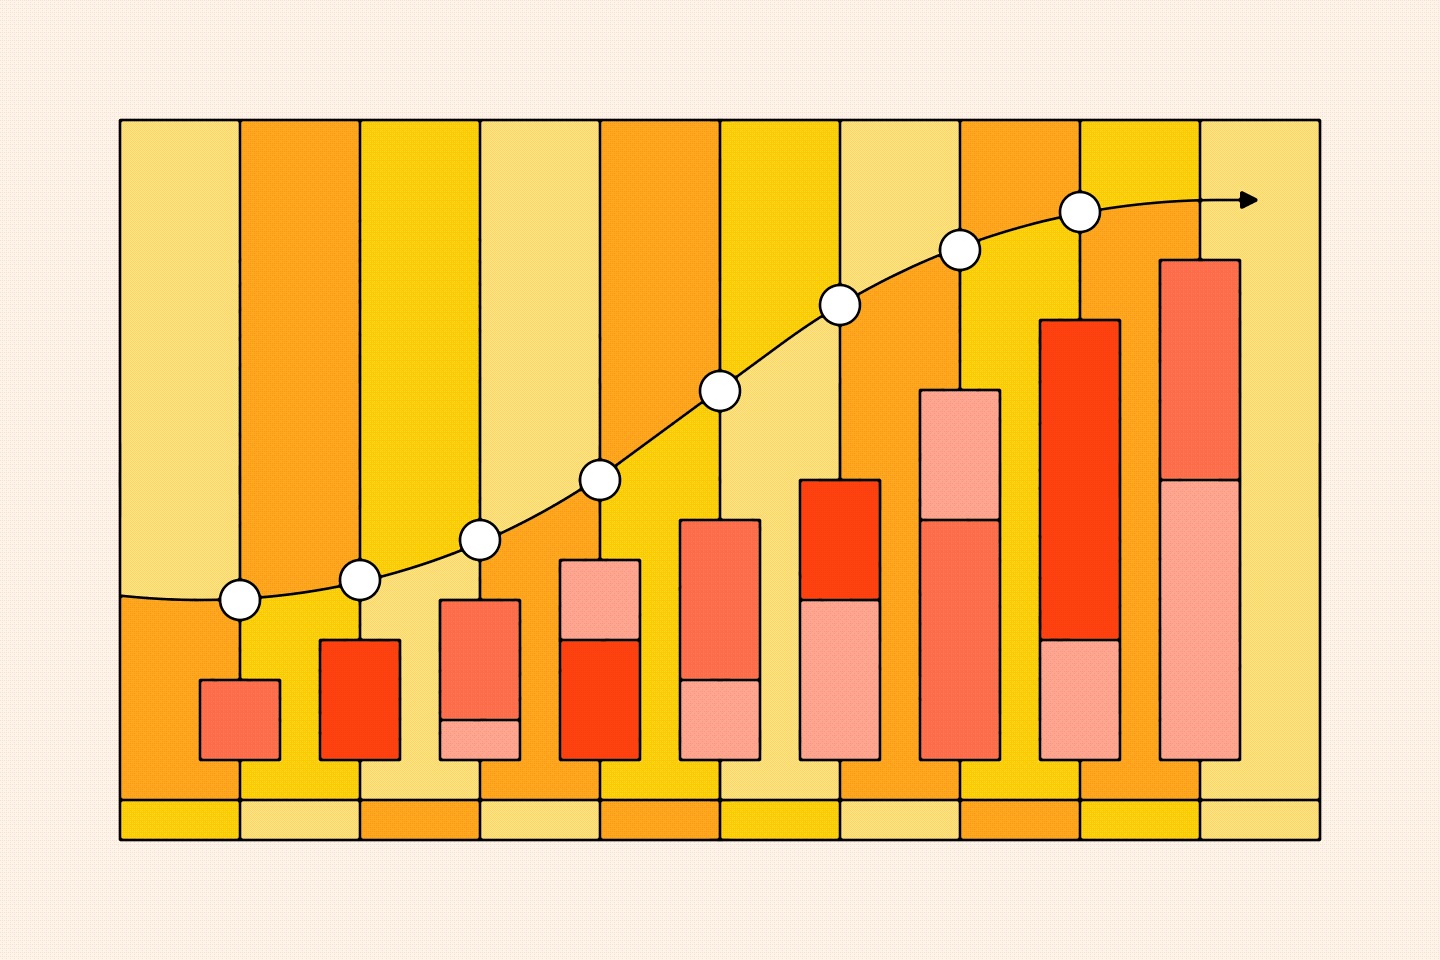 Illustration showing an increasing bar chart